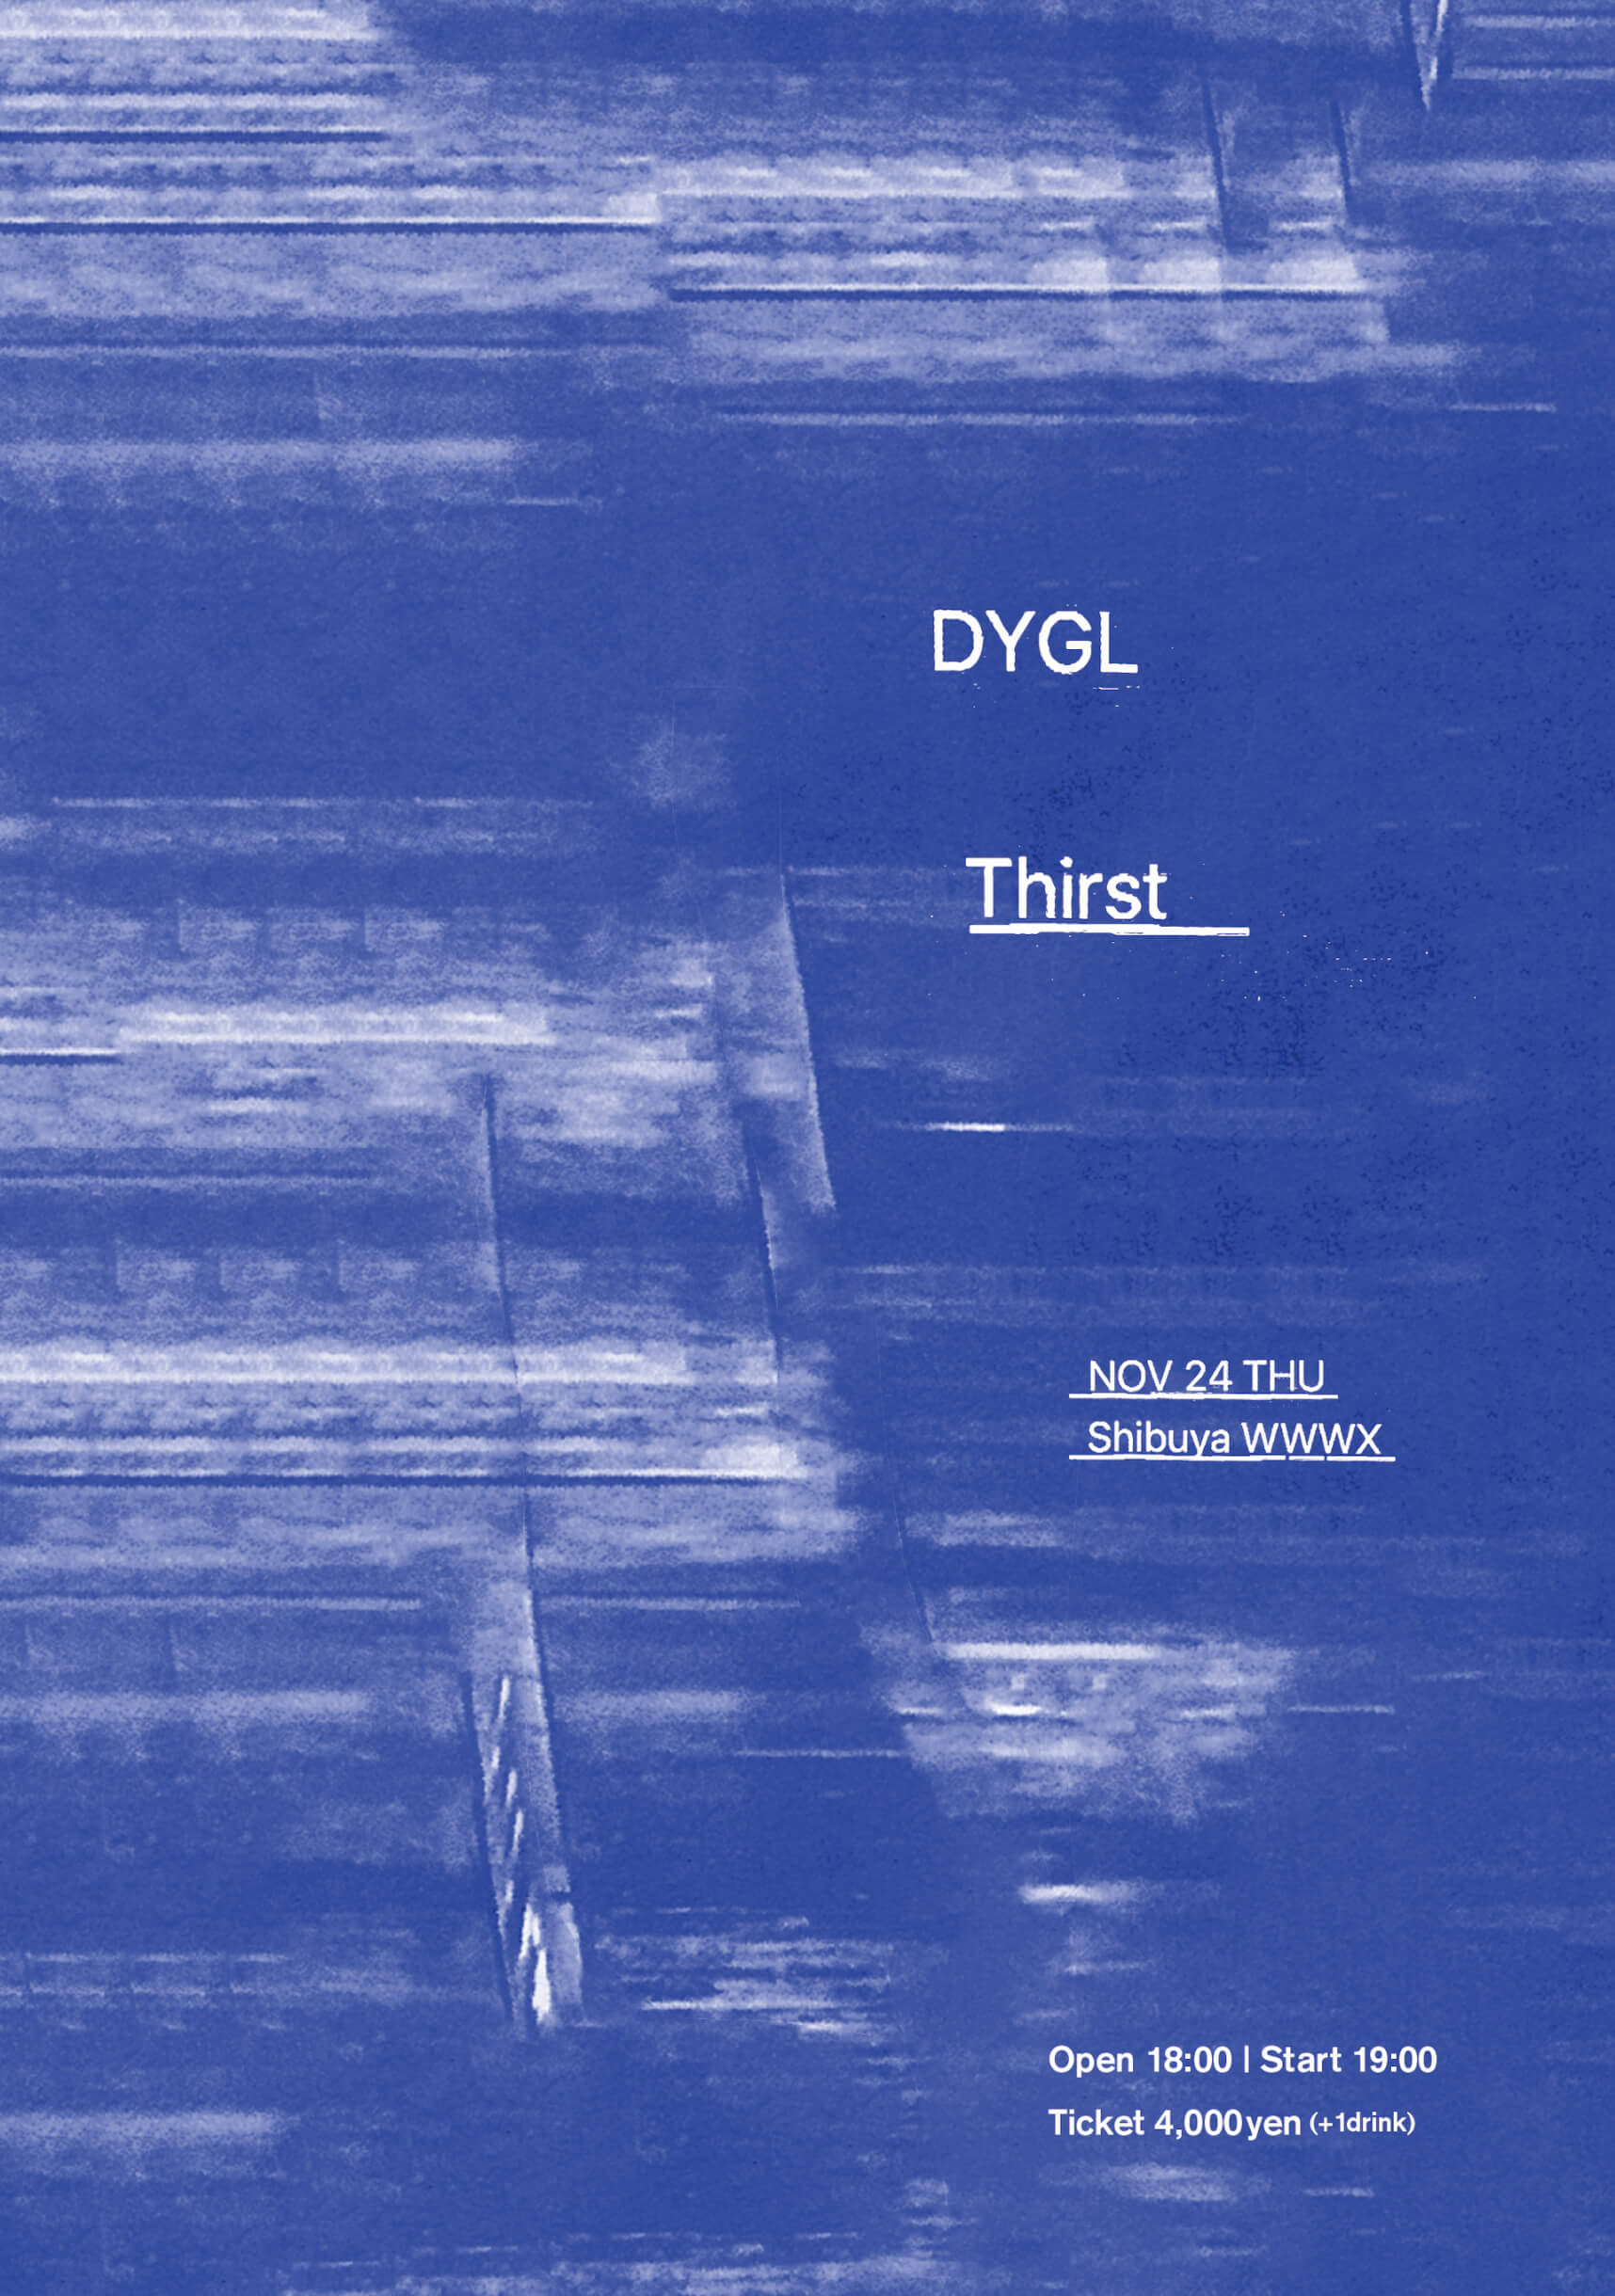 DYGL、新曲「Under My Skin」がリリース決定｜ワンマンライブ振替公演も渋谷WWWXで開催 music221114-dygl-01